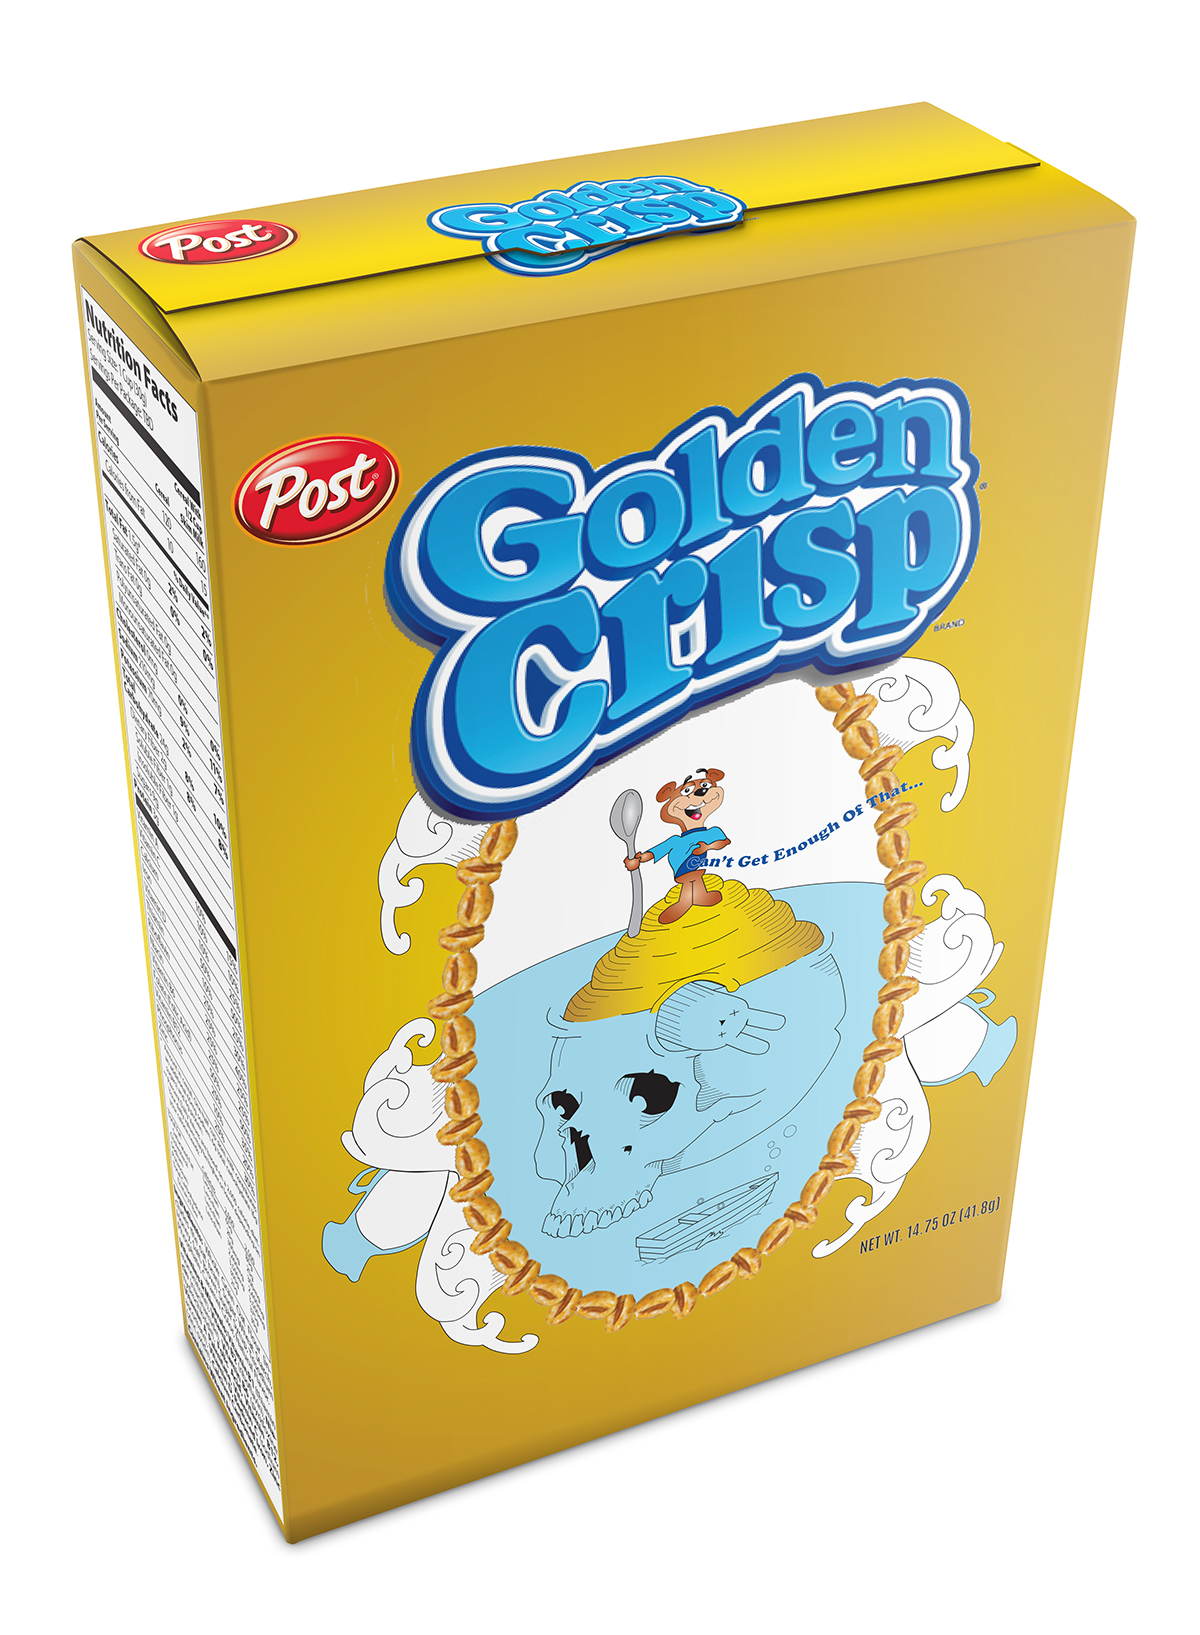 Adobe Portfolio jeremy fish cereal box Golden Crisp